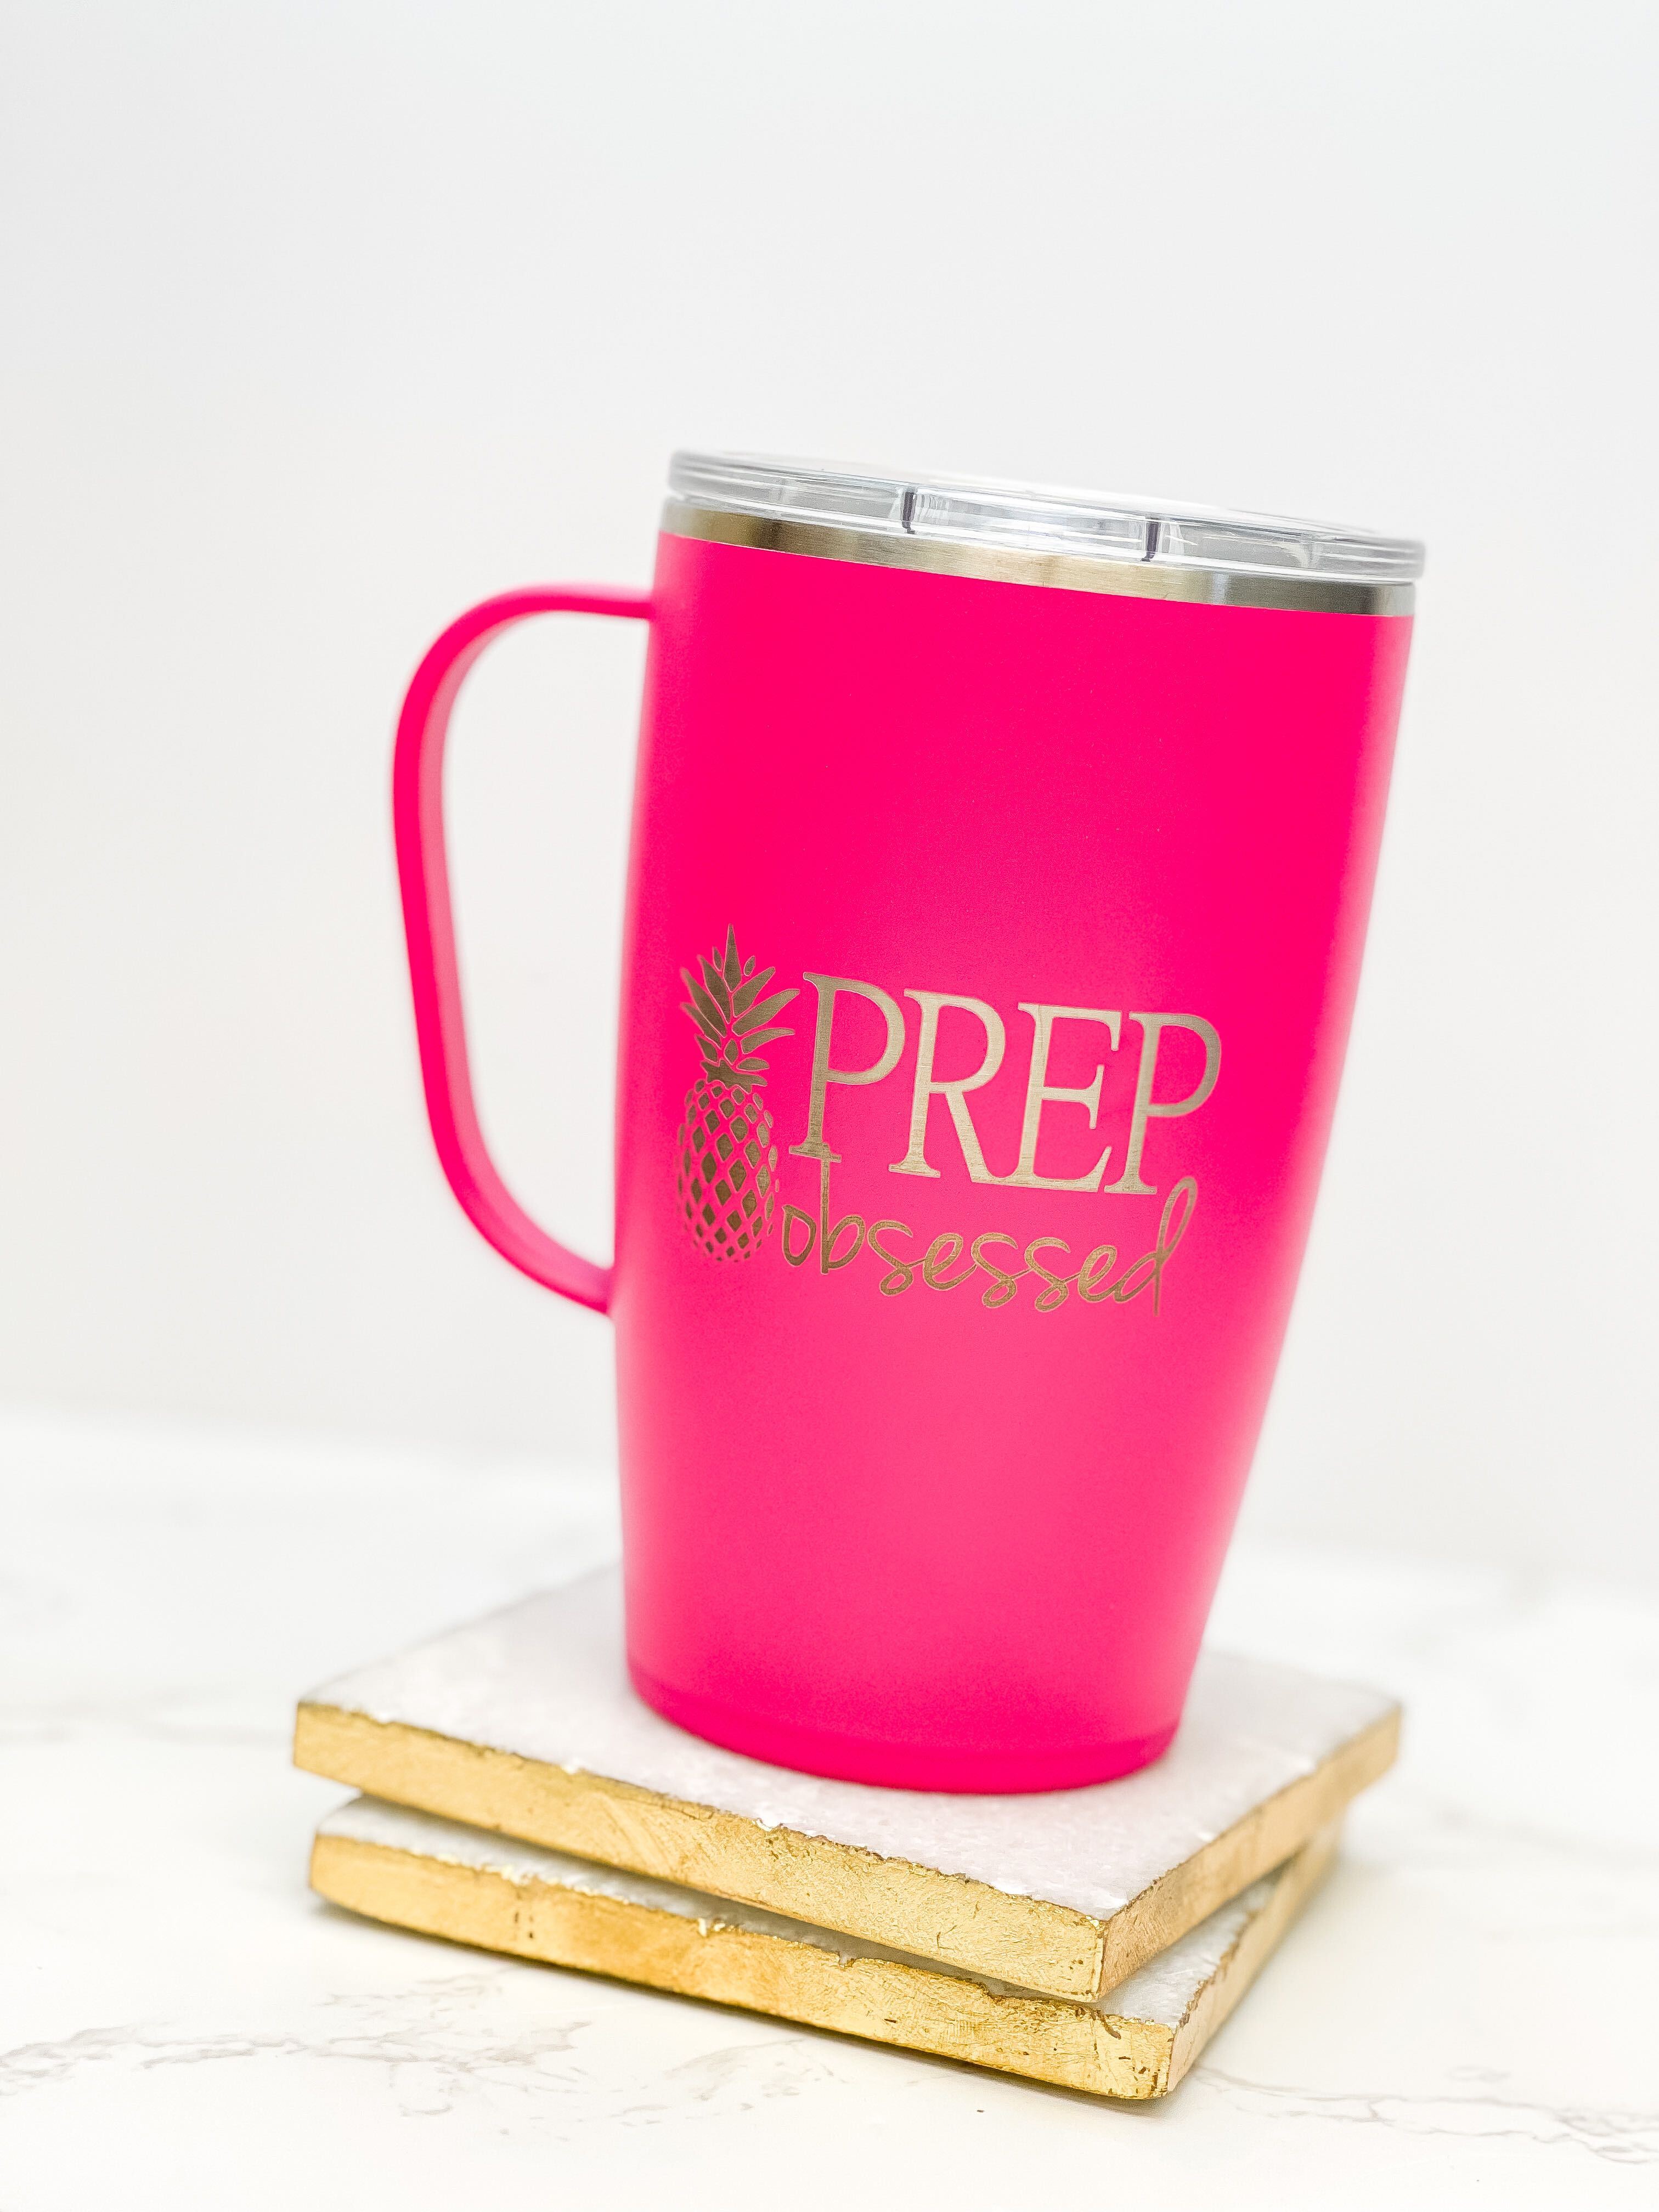 Hot Pink Prep Obsessed 18 oz Stainless Steel Travel Mug by Swig